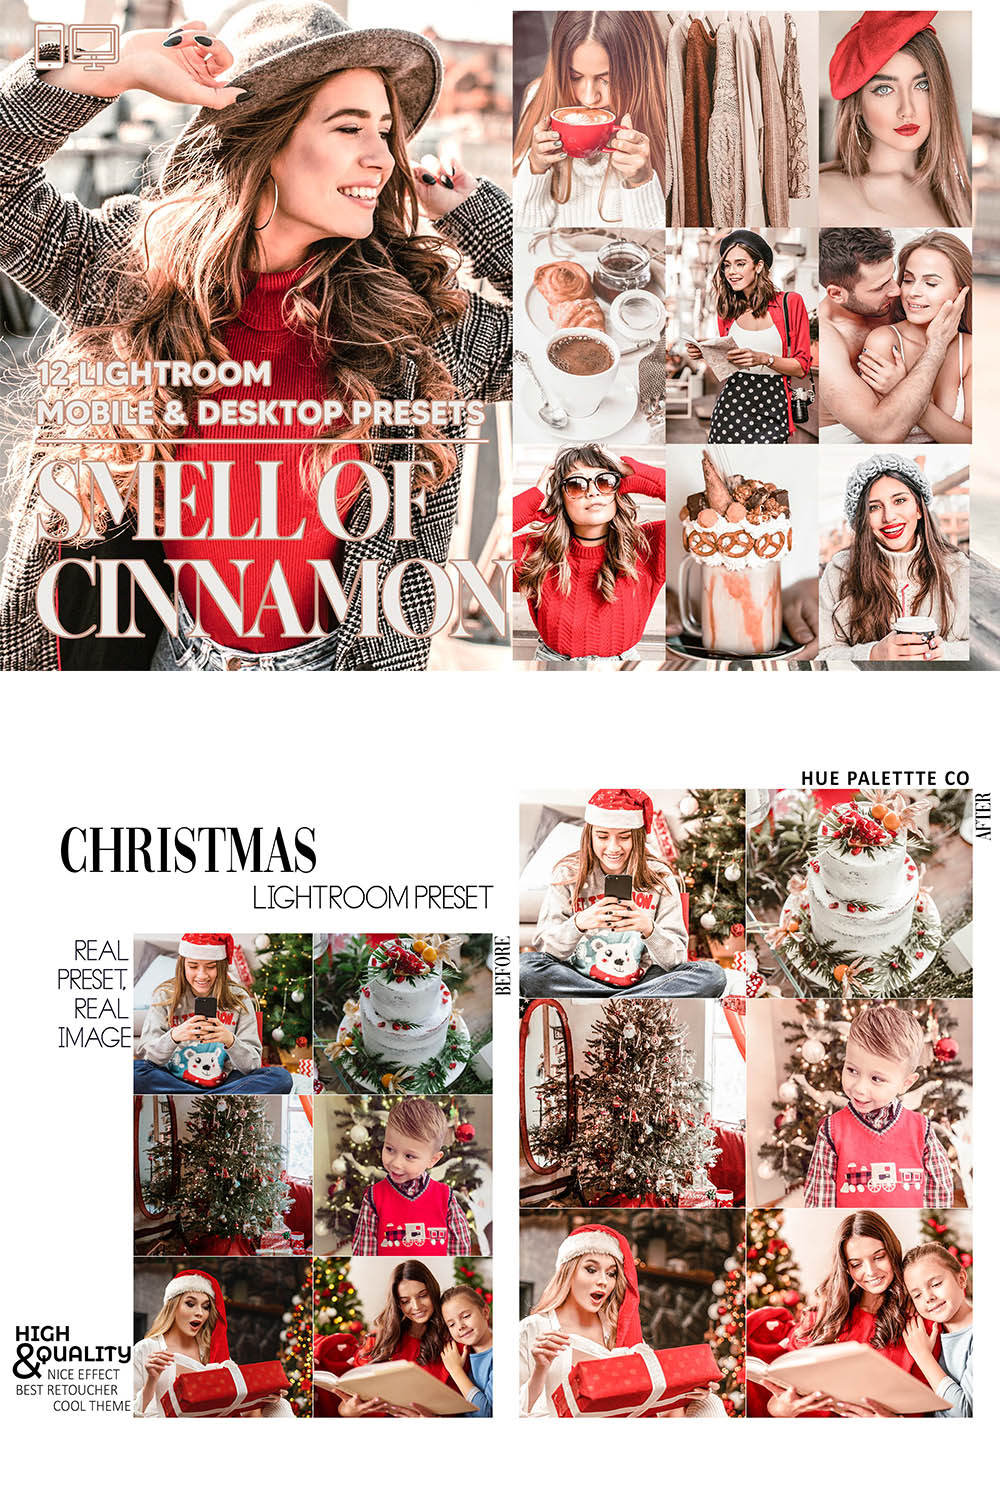 12 Smell Of Cinnamon Lightroom Presets, Winter Mobile Preset, Love Desktop LR Lifestyle DNG Instagram Bright Filter Theme Portrait Season pinterest preview image.